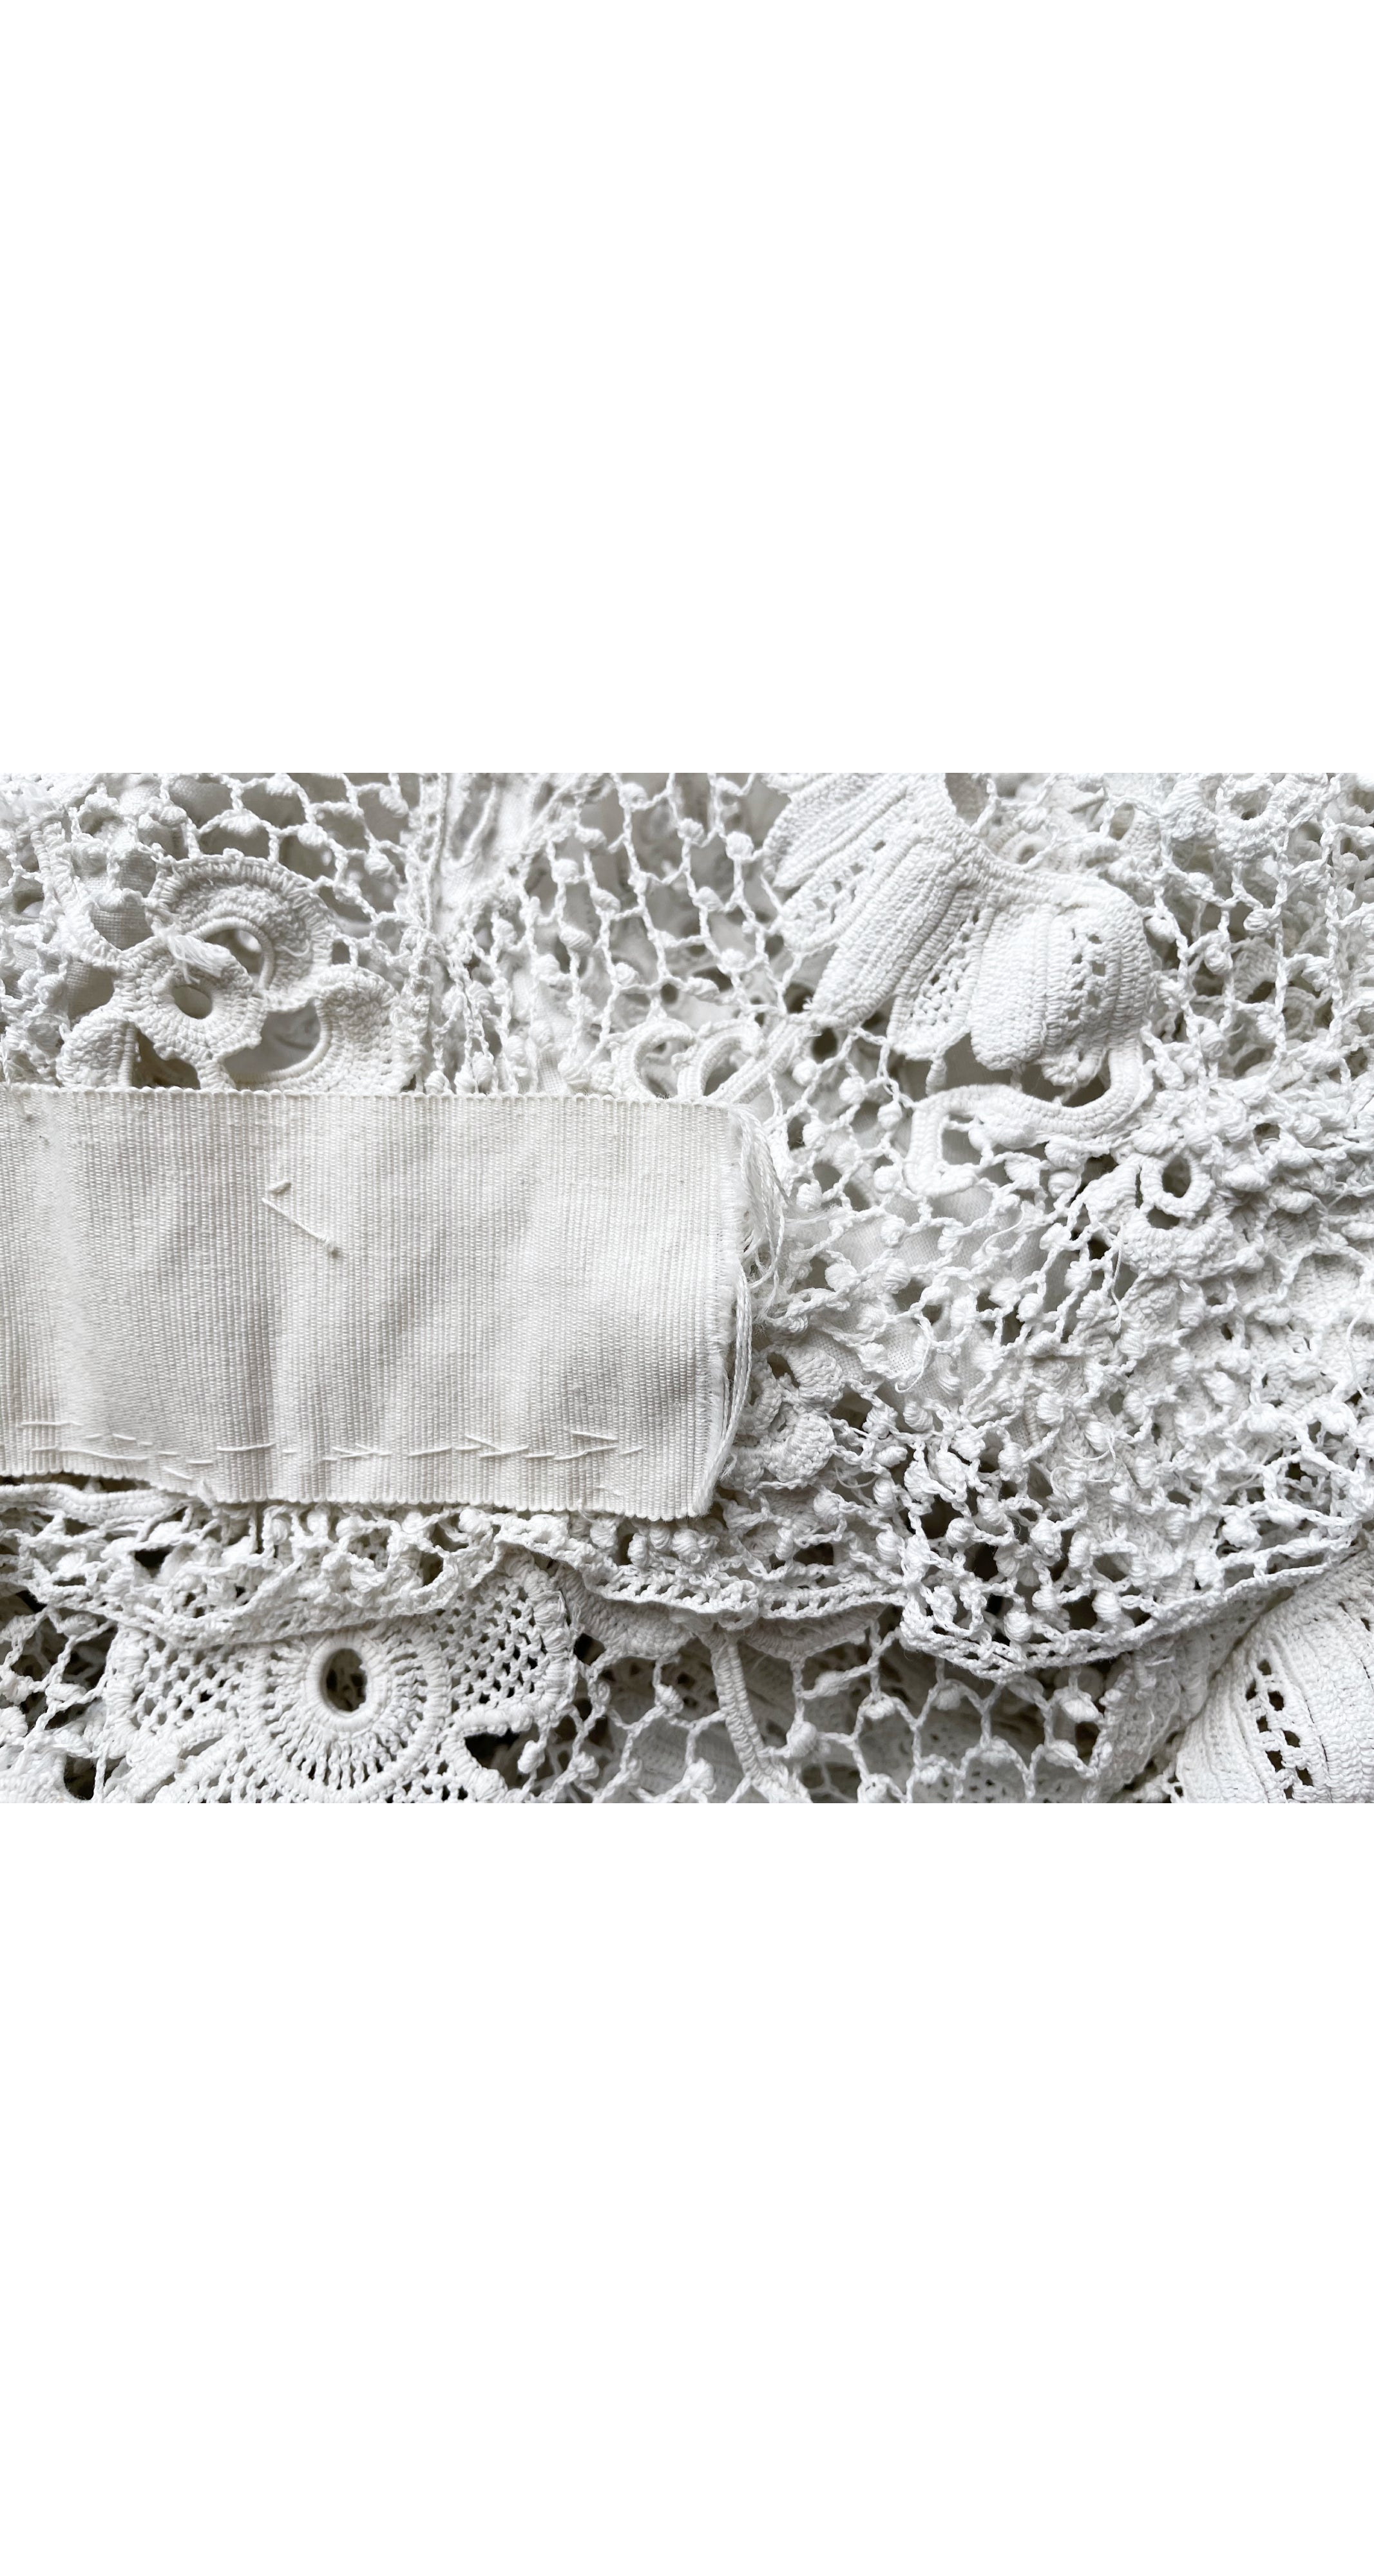 White Vintage Elements Irish Crochet Cotton Stock Photo 443176789